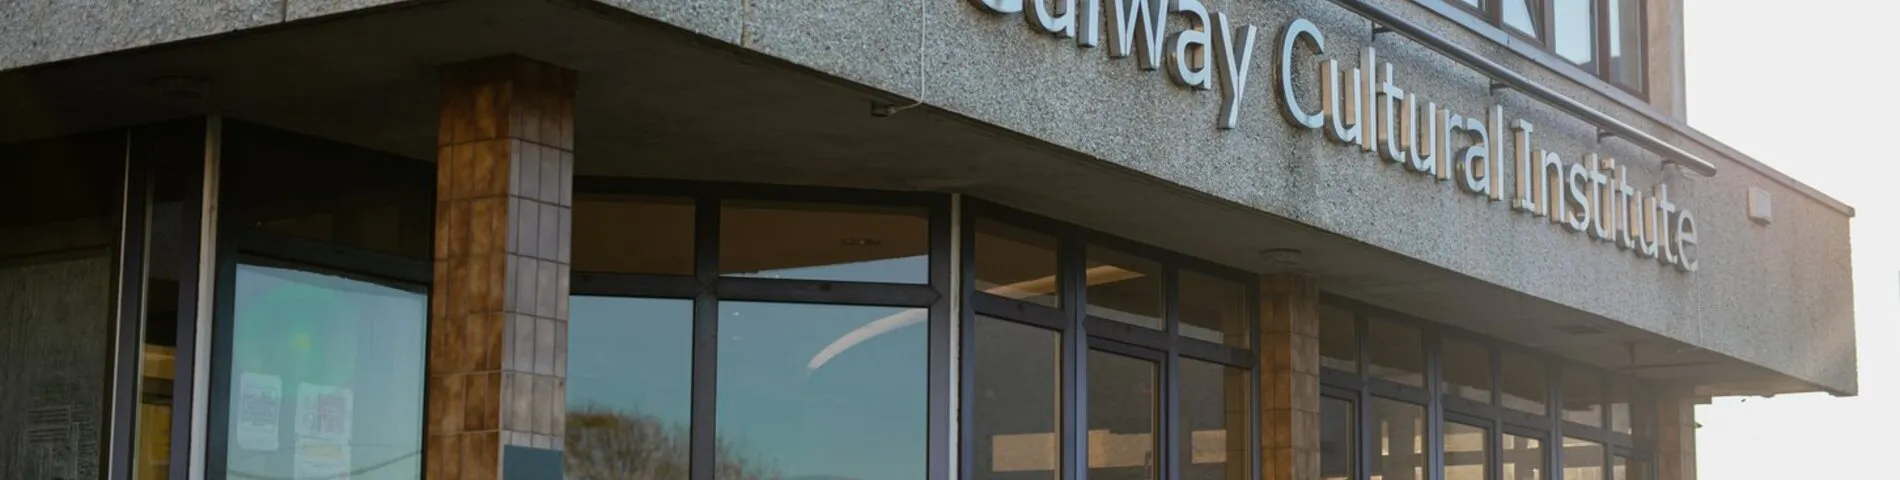 Galway Cultural Institute snímek 1	